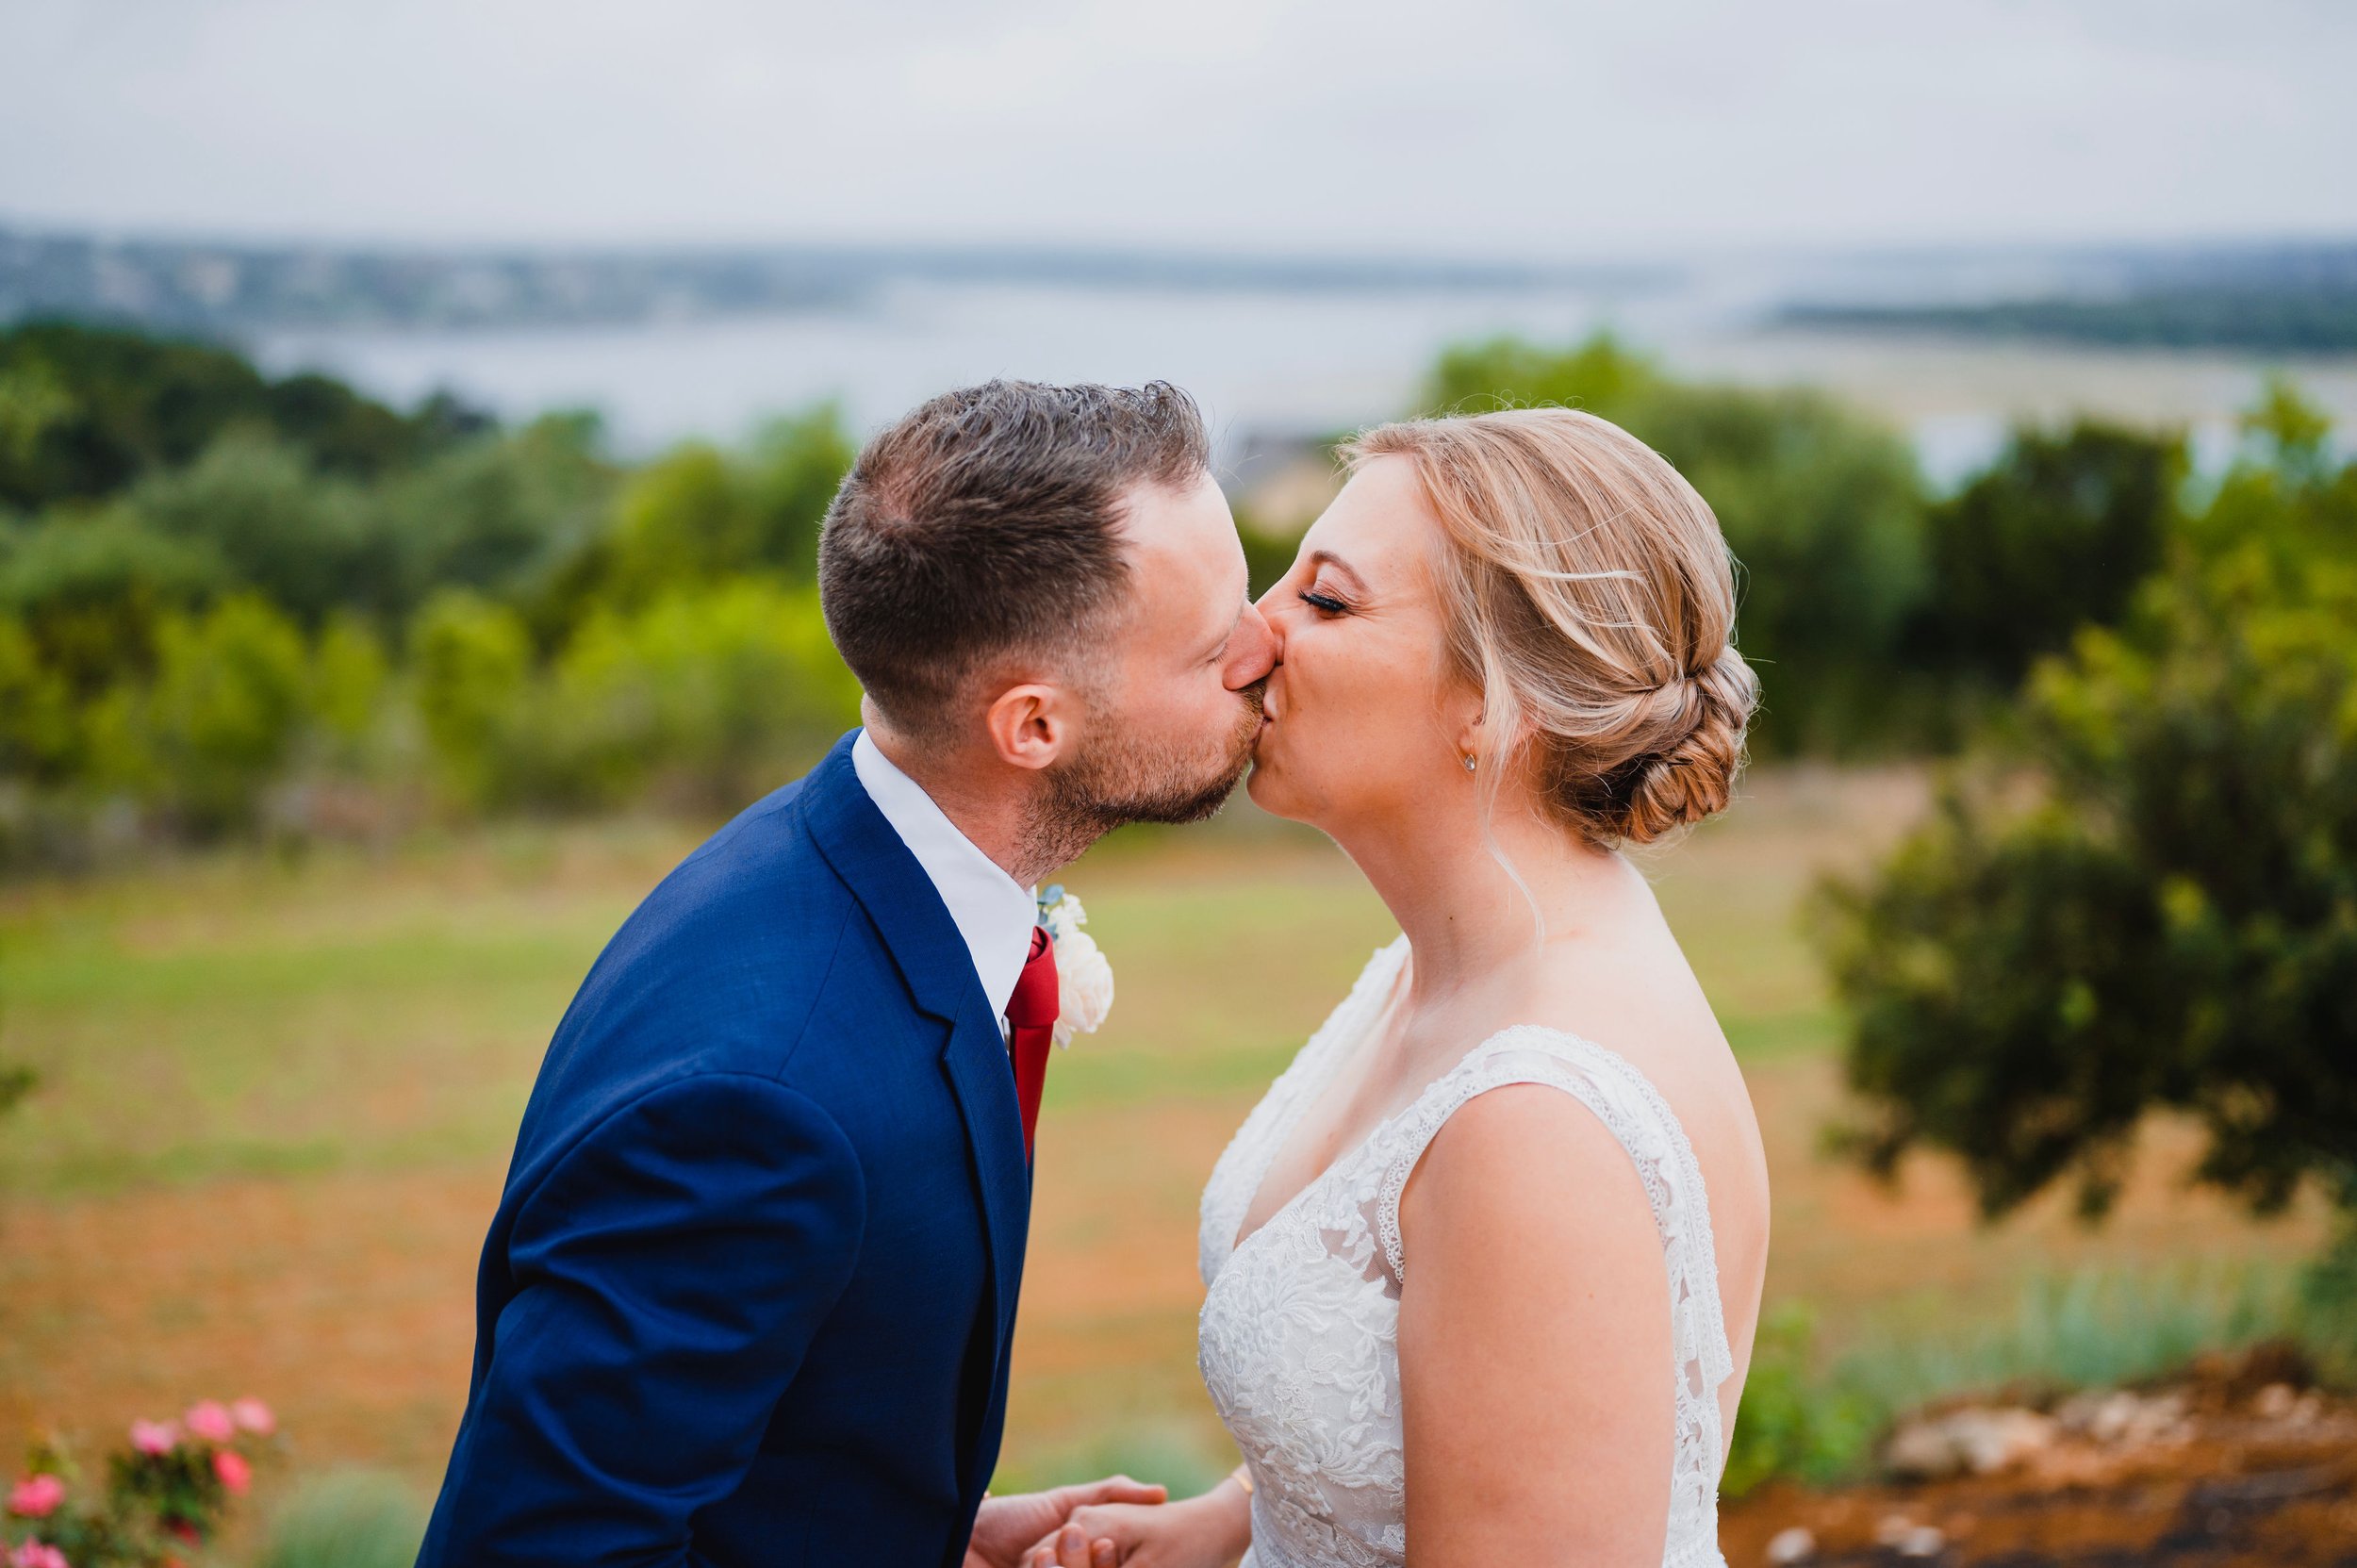 Houston-wedding-photographer-bride-and-groom-3.jpg